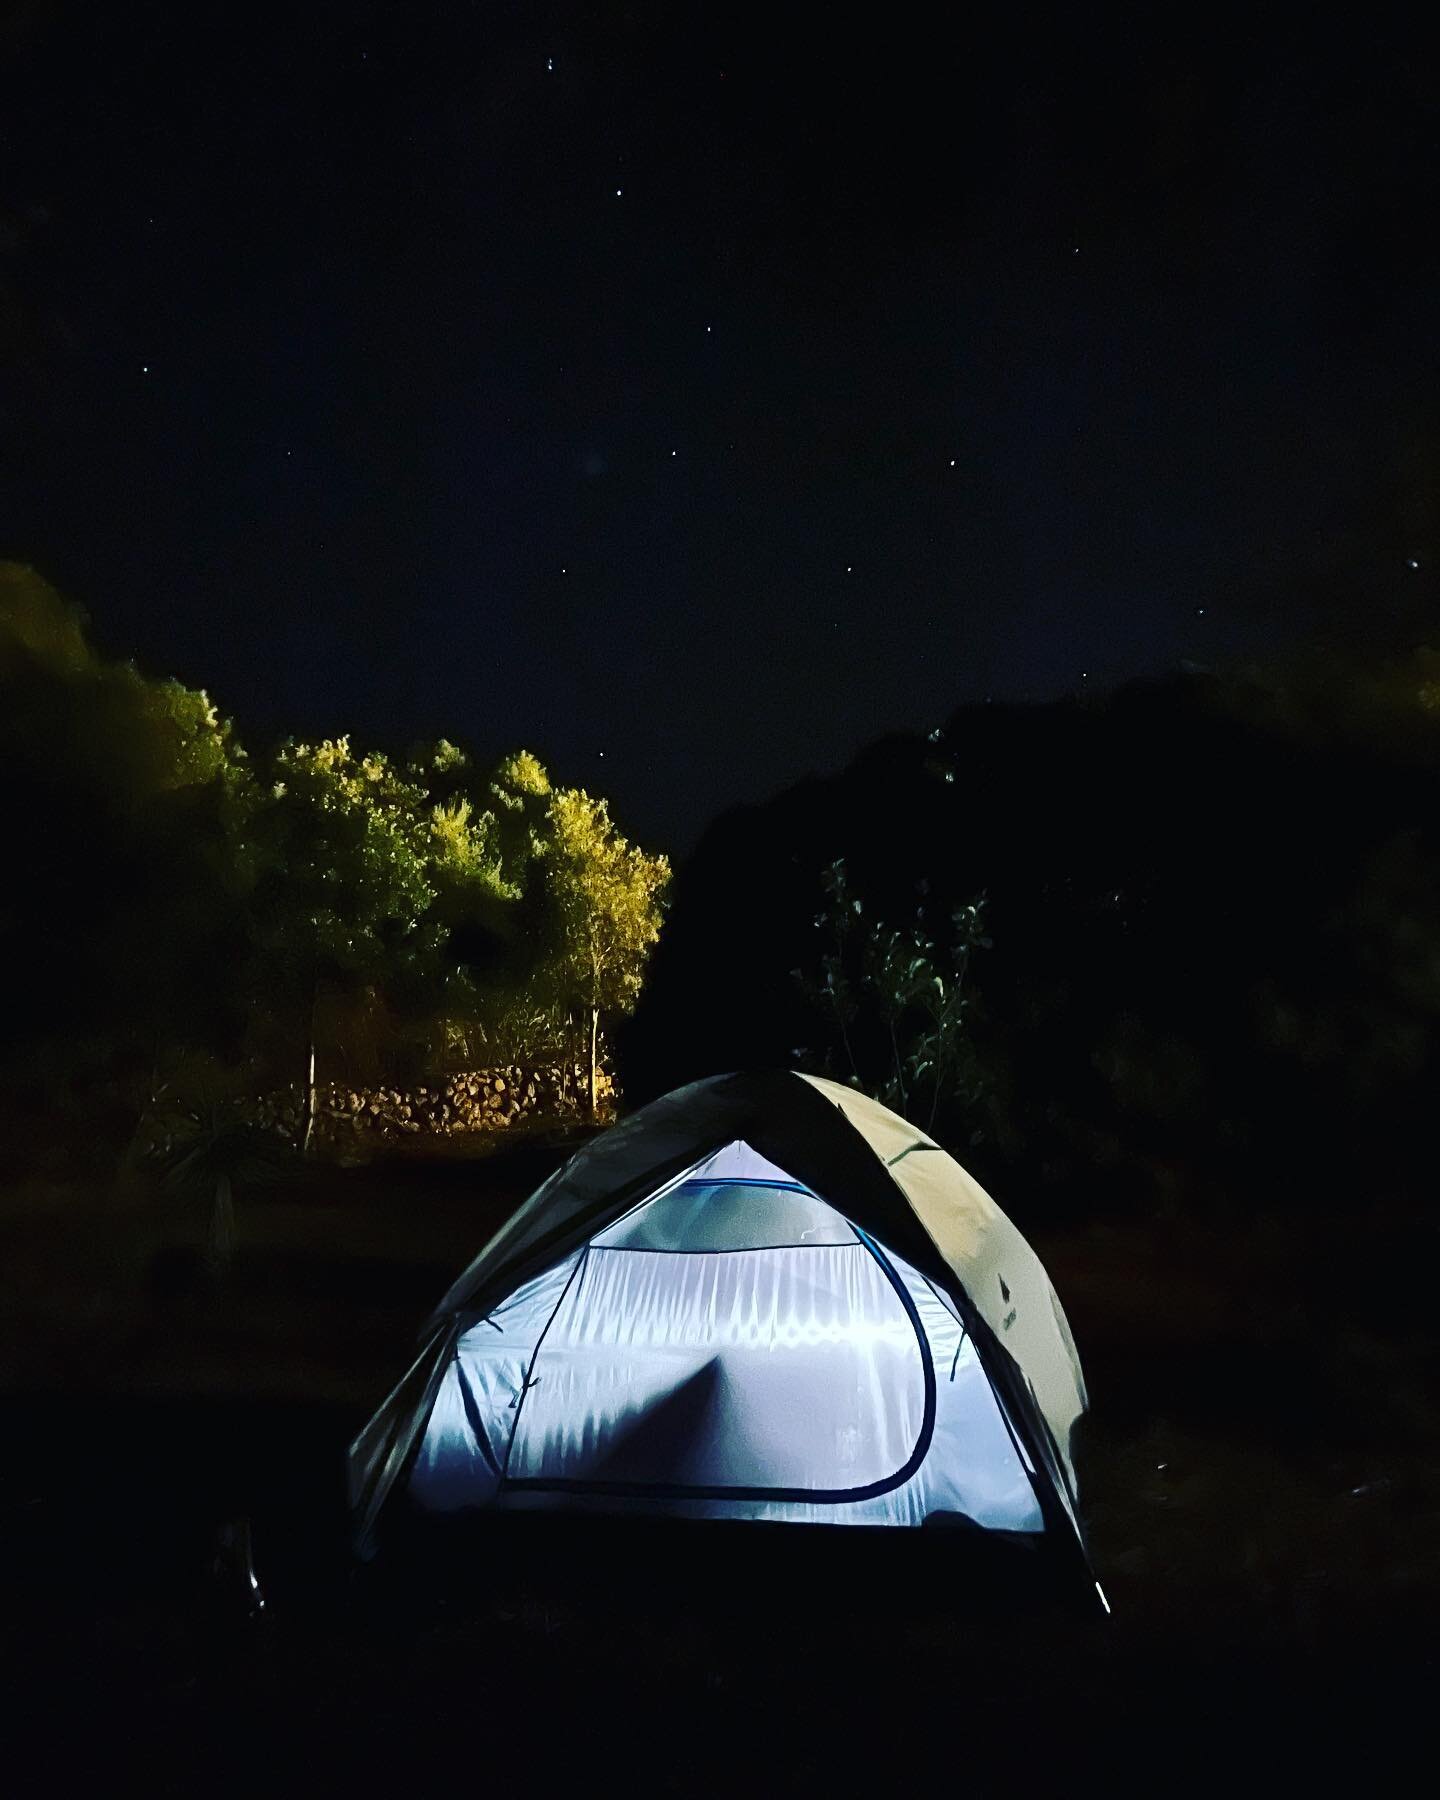 Camping under the stars&hellip;

#sardinia #vakantie #campinglife #camping #genieten #dorgali #italia